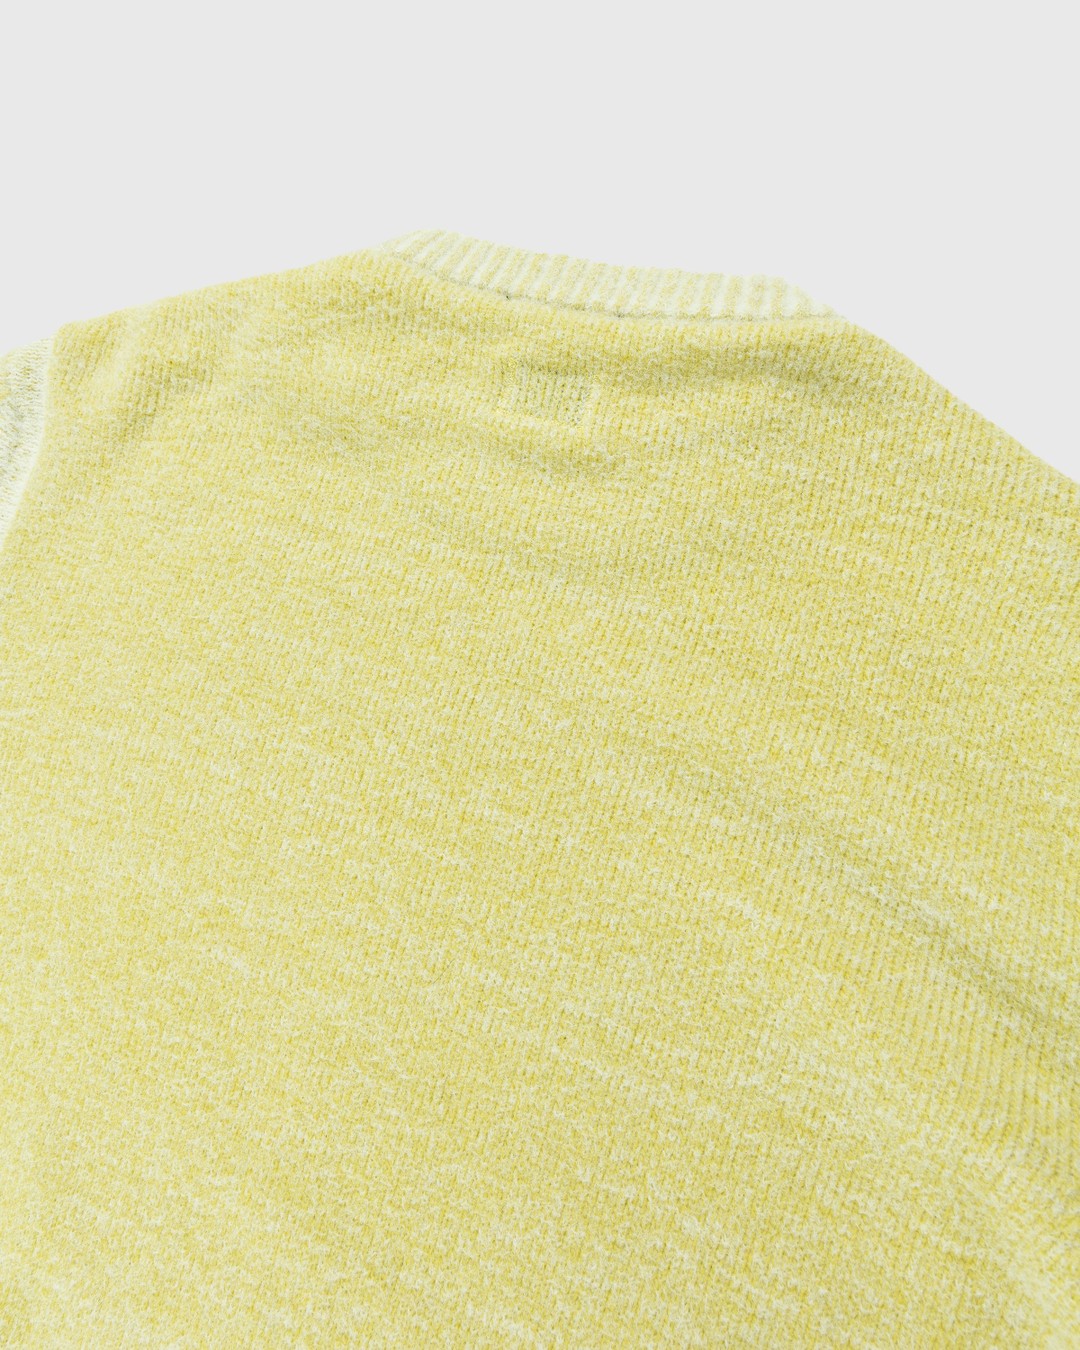 C.P. Company – Fleece Knit Jumper Yellow - Knitwear - Yellow - Image 4